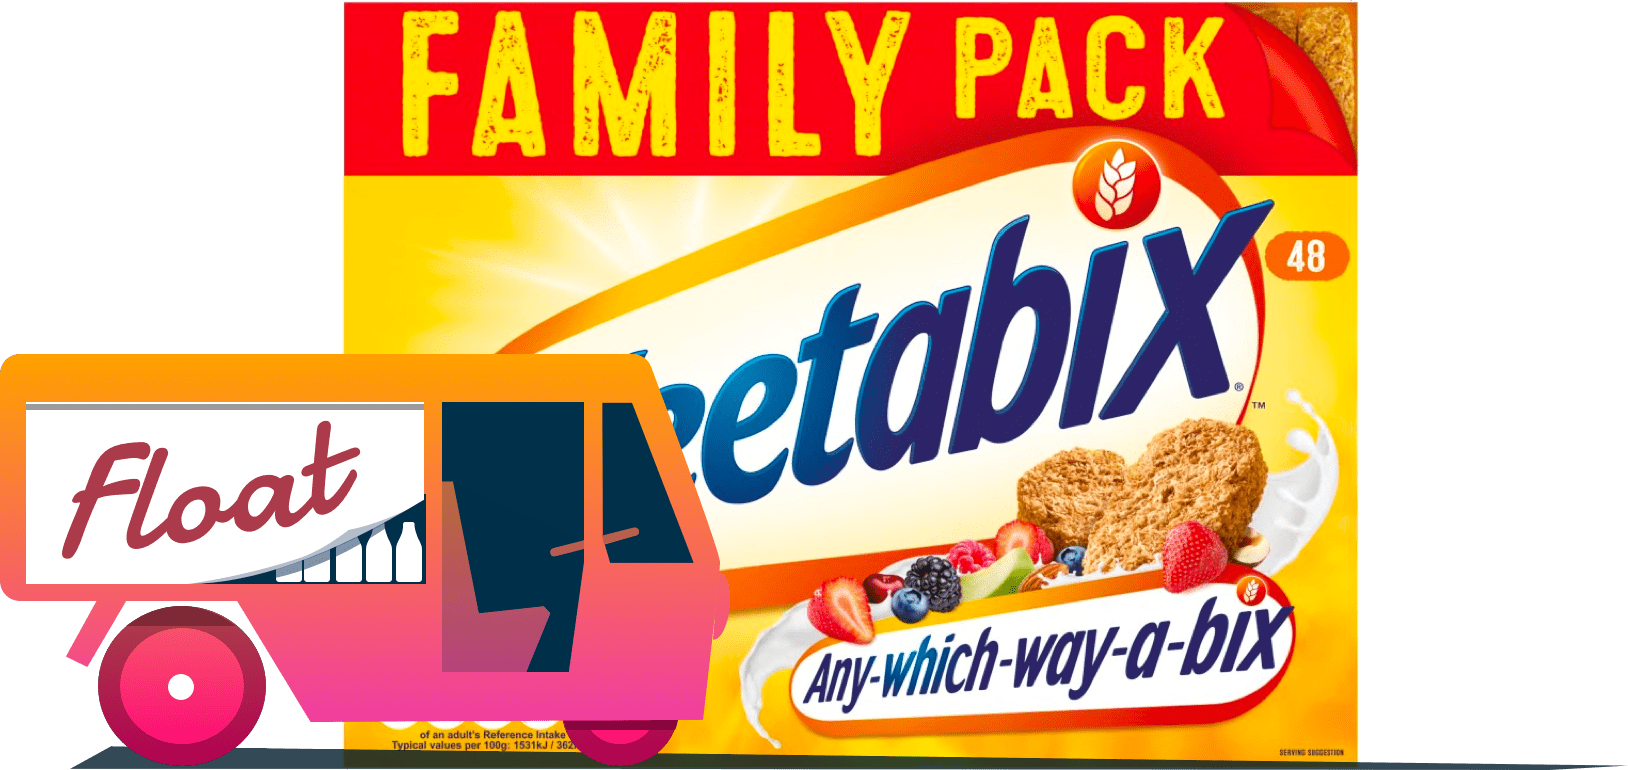 Family cereal packs deliver better value